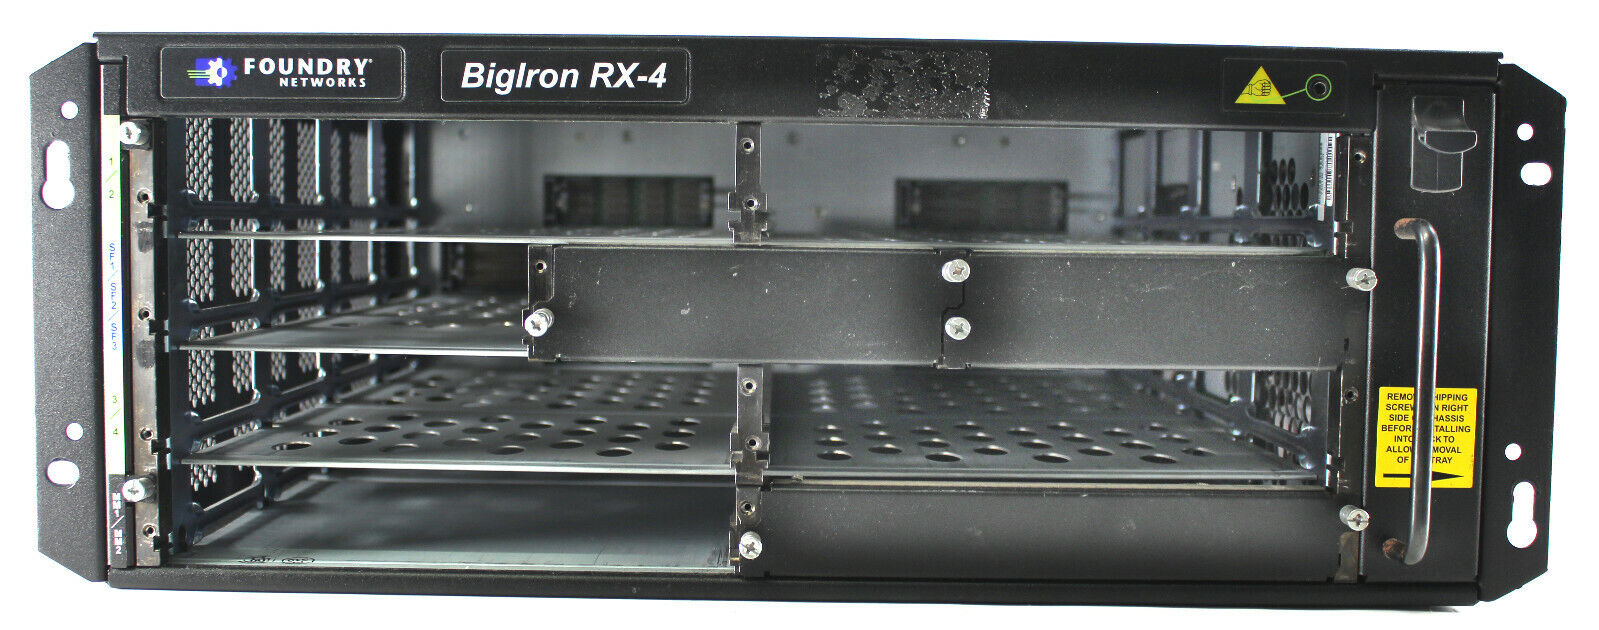 Brocade Foundry BI-RX-4-AC BigIron RX Series 9-Slot Chassis System BI-RX-4